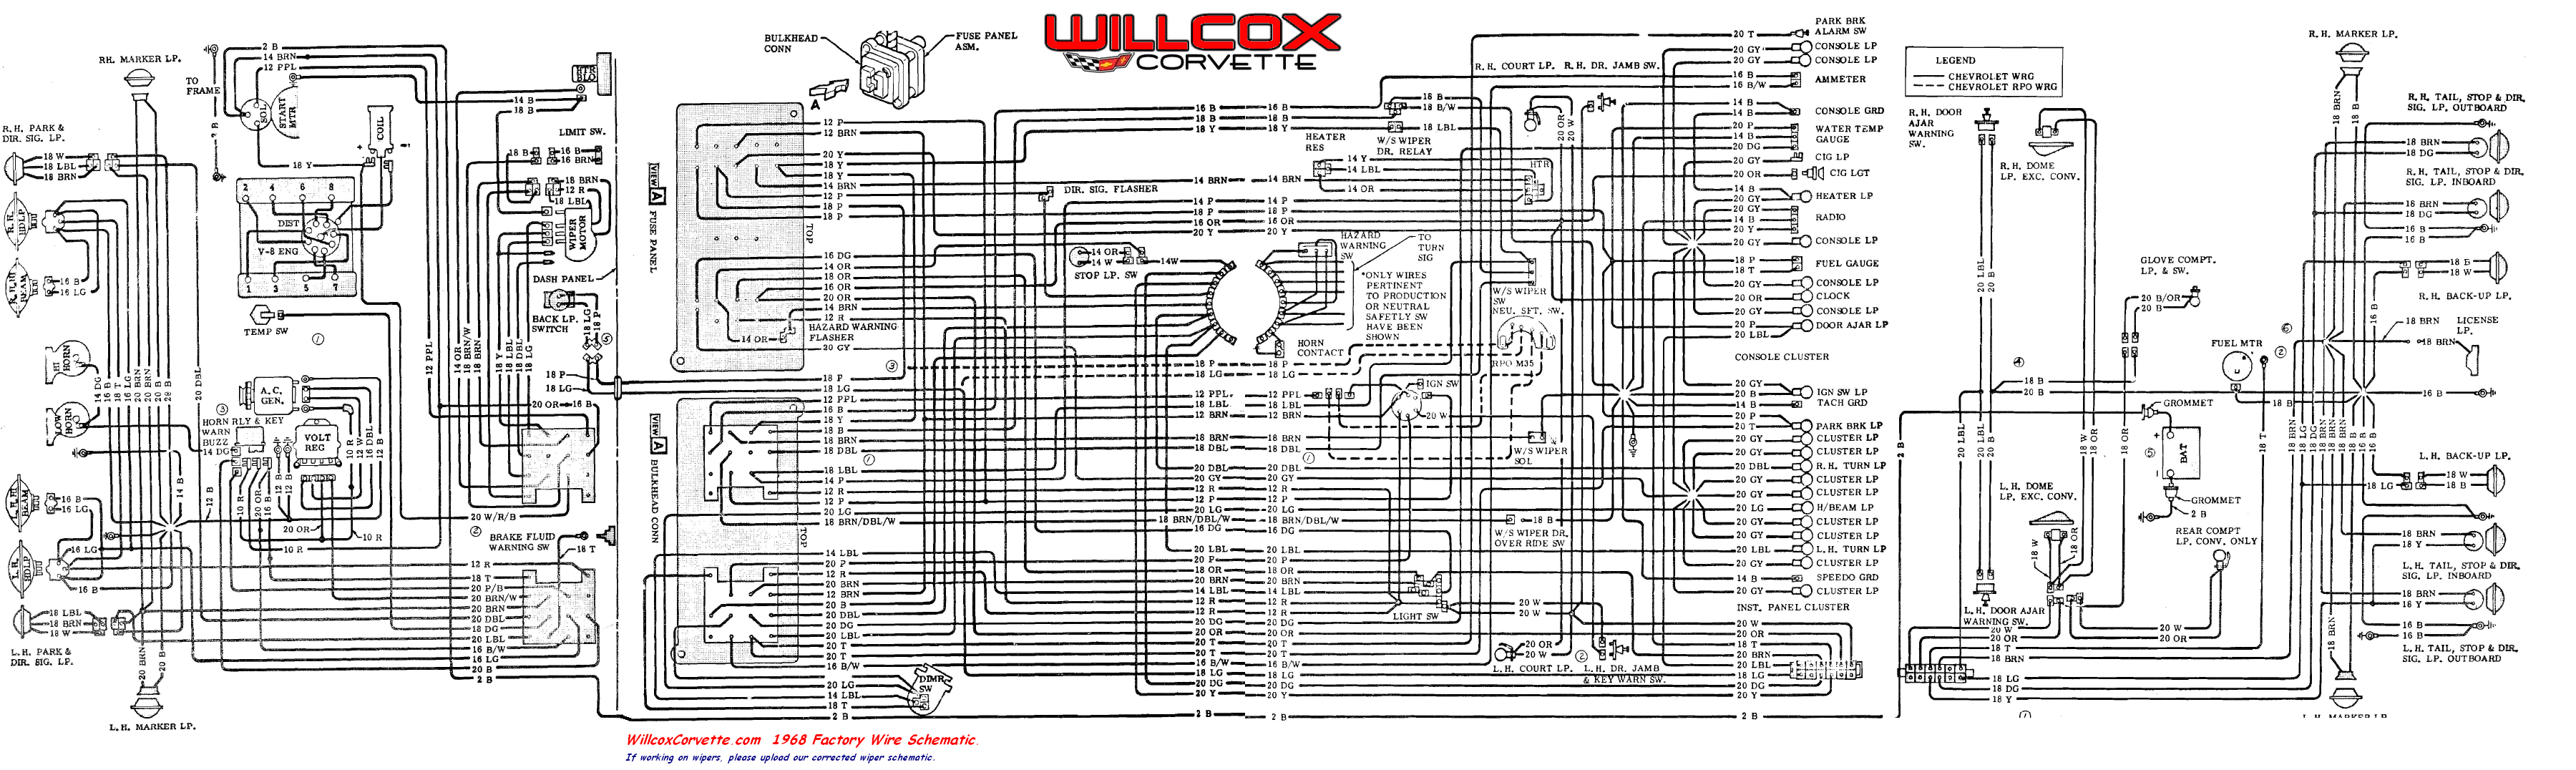 corvette wiring diagram wiring diagram compilation 2001 corvette stereo wiring diagram 2001 corvette wiring diagram